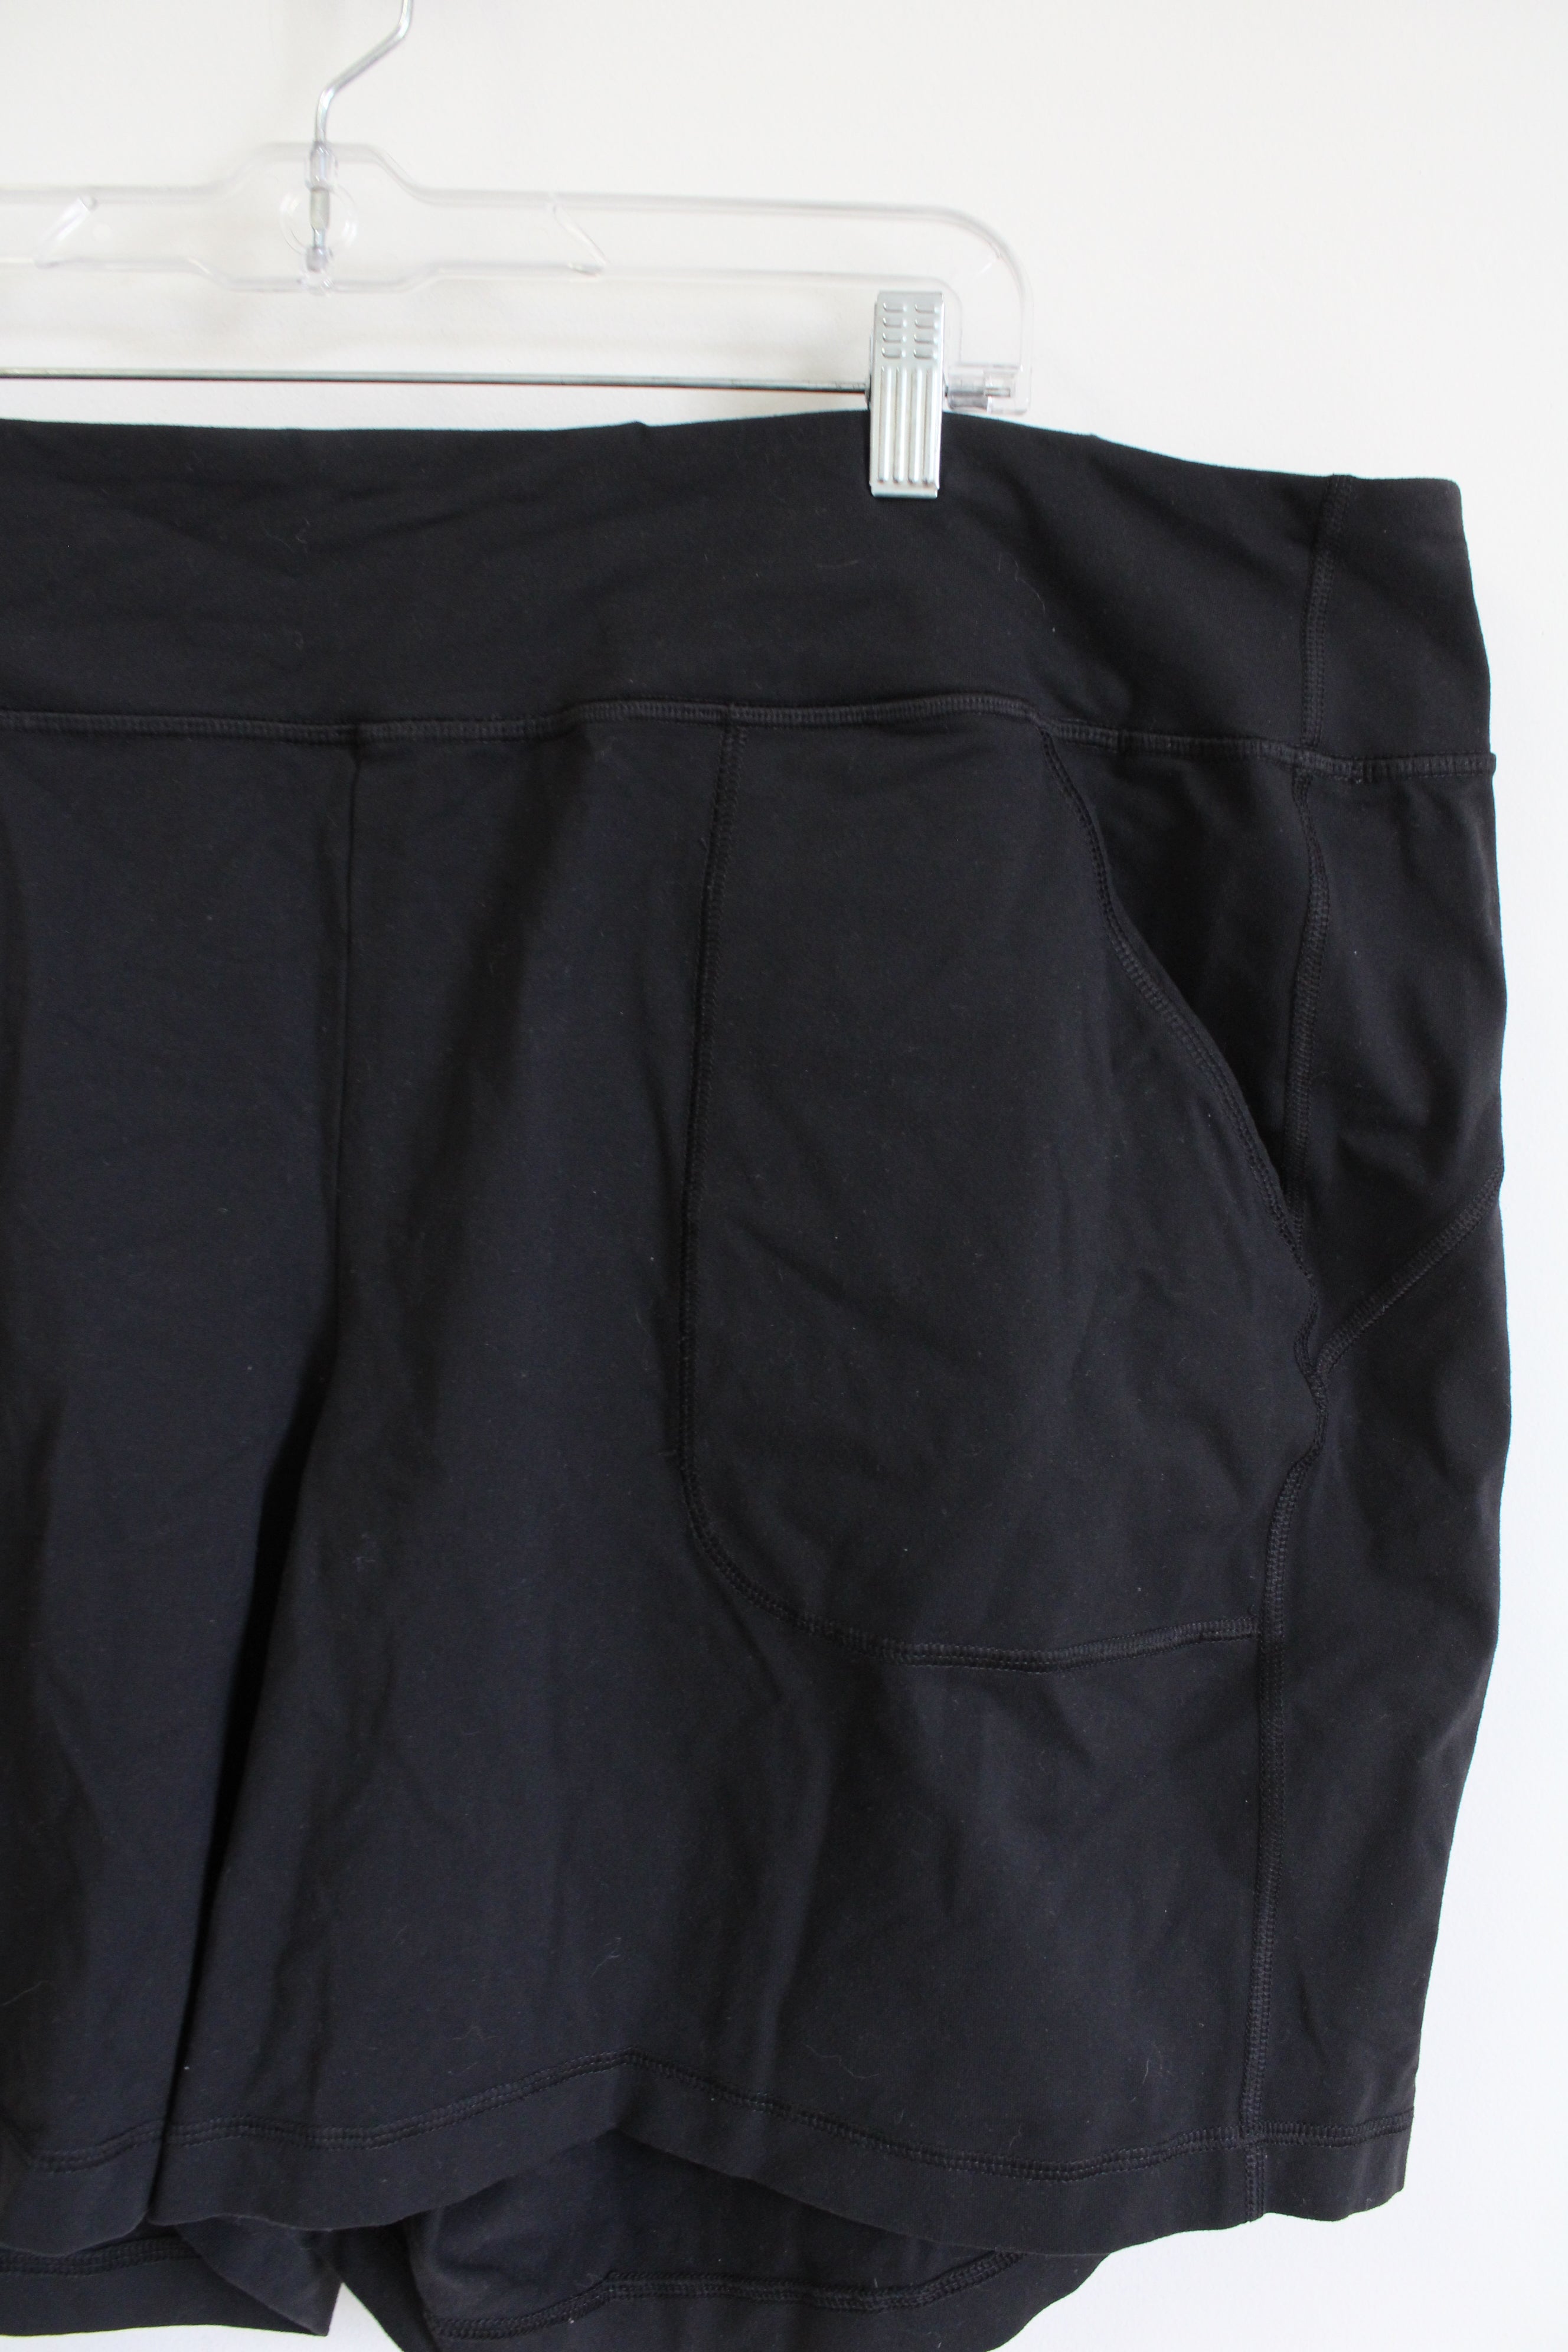 Duluth Trading Co. Black Knit Shorts | 3XL